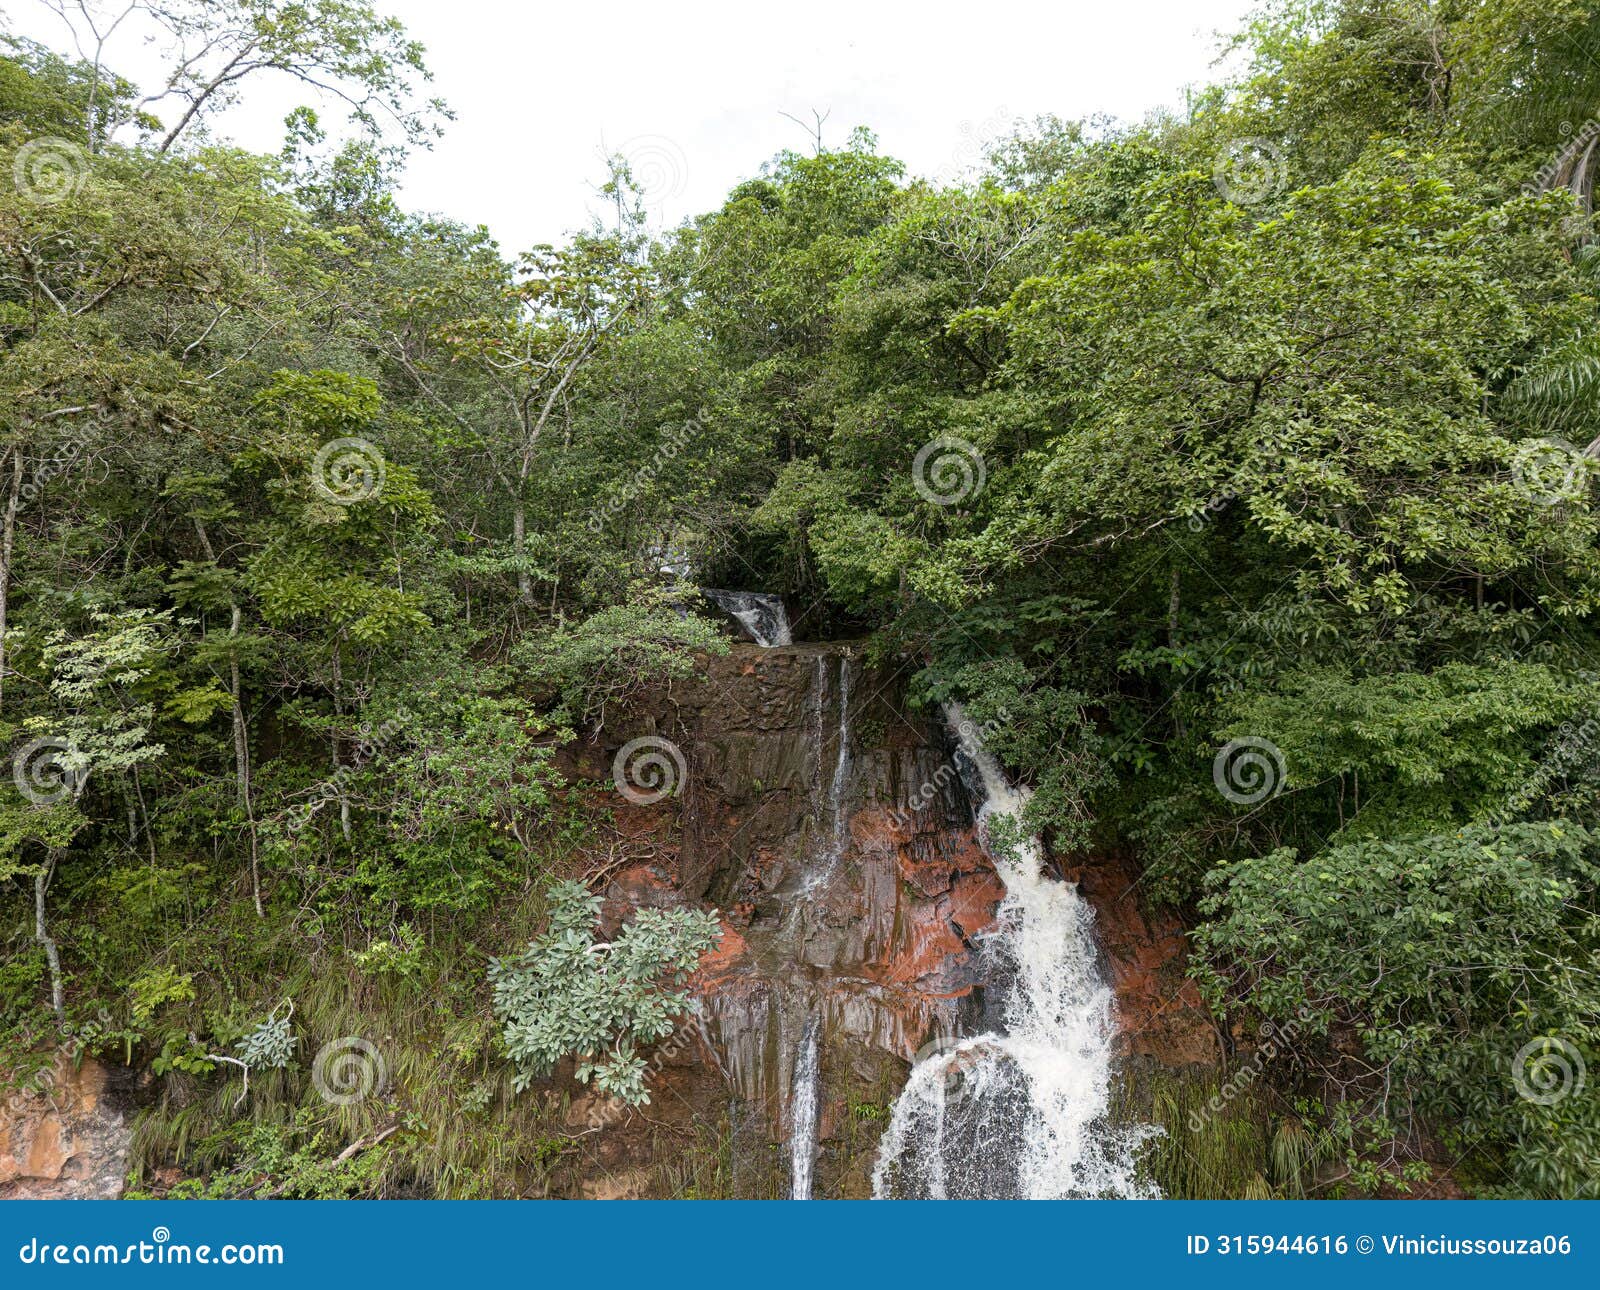 waterfall cachoeira do socorro natural tourist spot in cassilandia